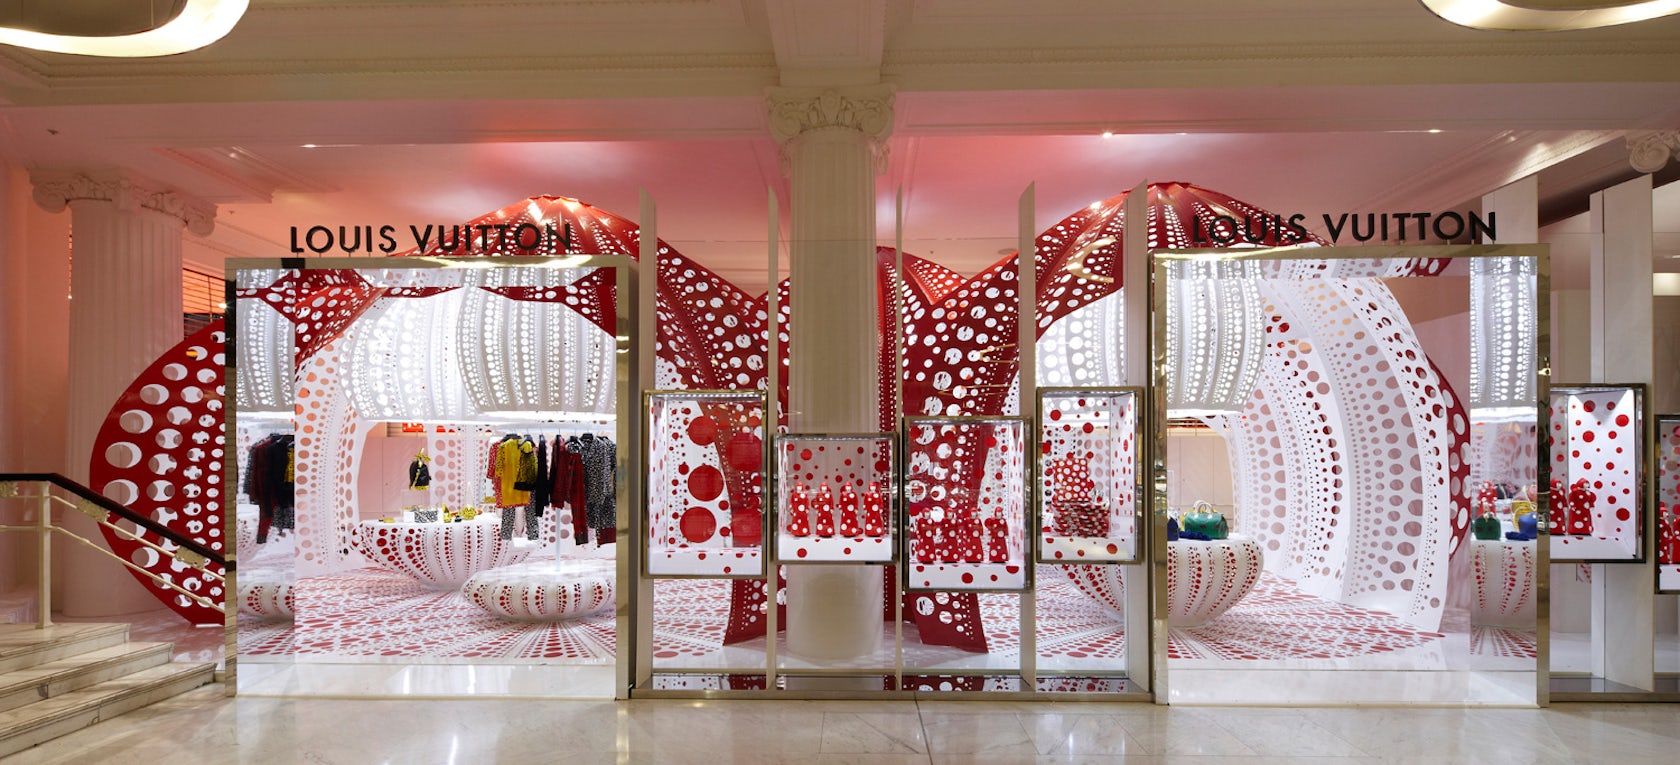 Louis Vuitton - Inside the Louis Vuitton Yayoi Kusama pop-up store